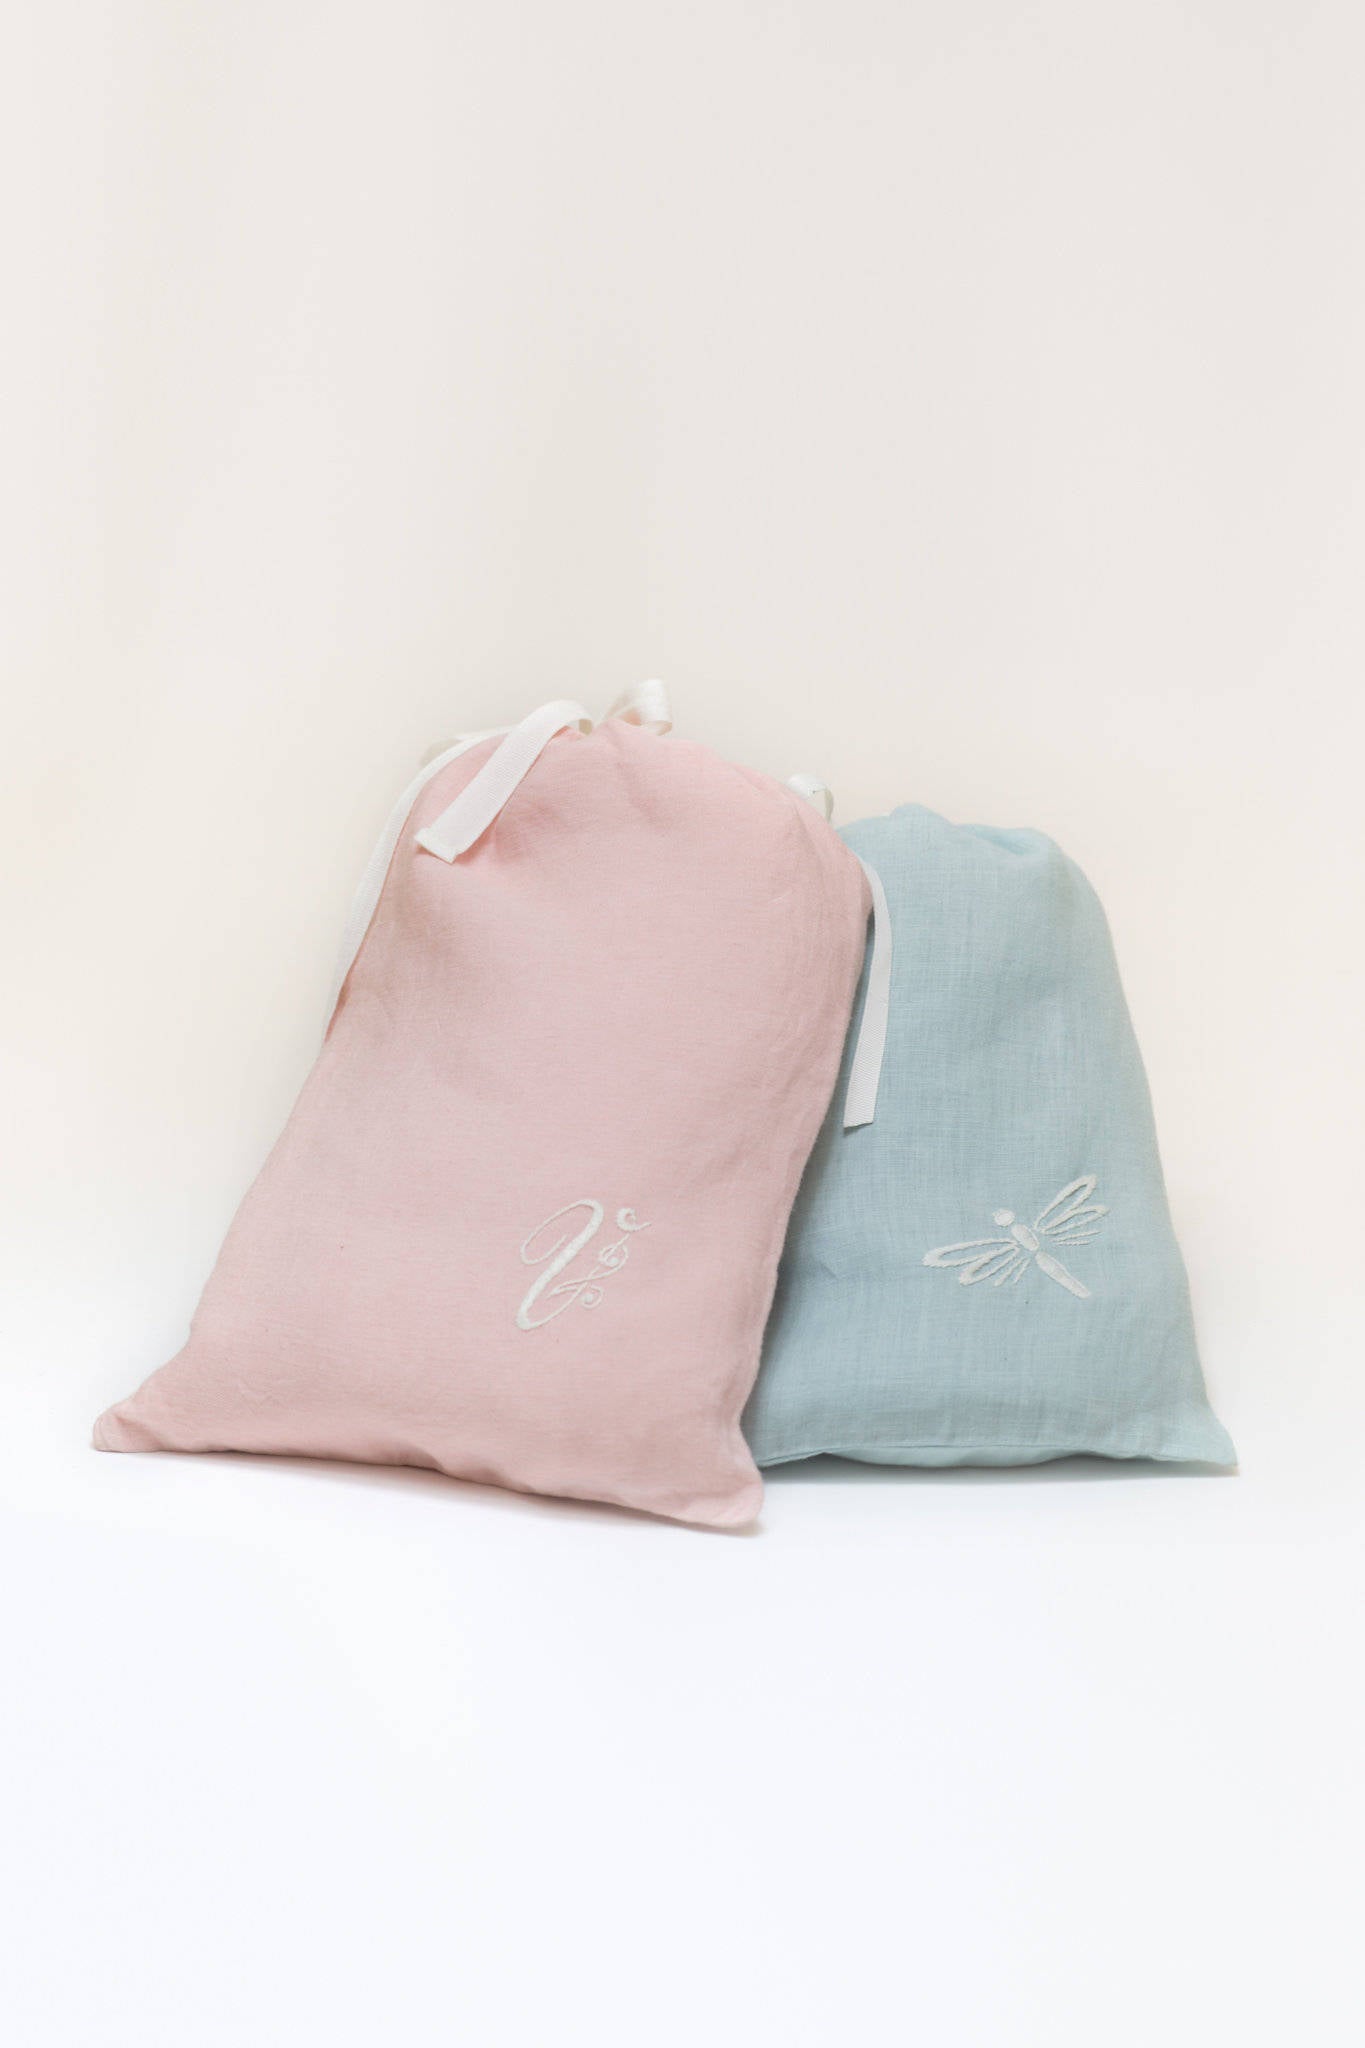 Linen Bag Monogrammed/ Shoe Bag Personalized/ Linen Gift Bag Handembroidered